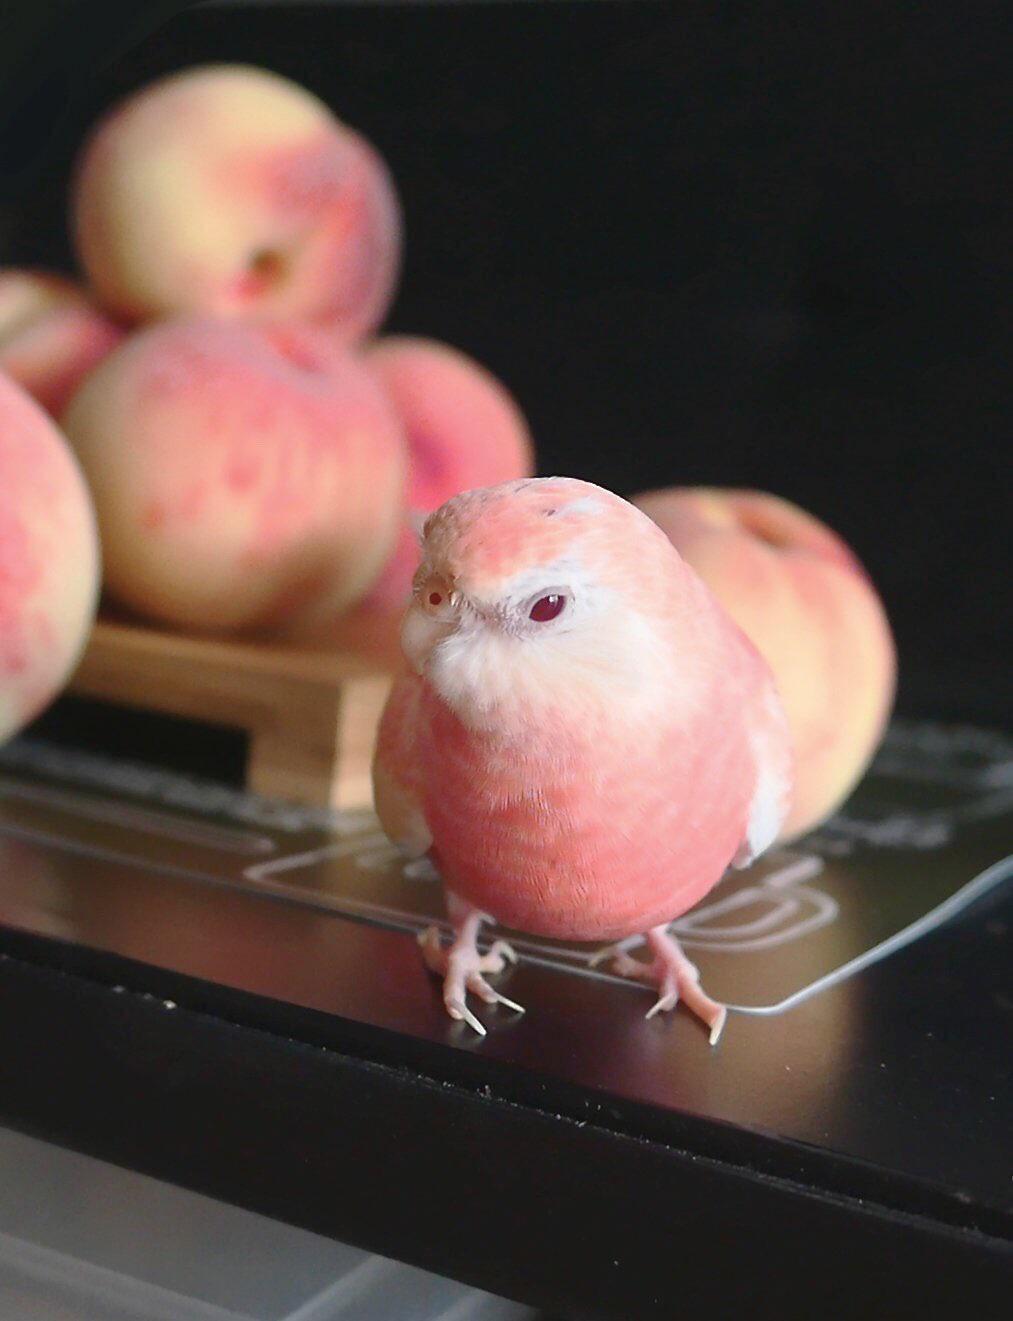 Forbidden+peach.